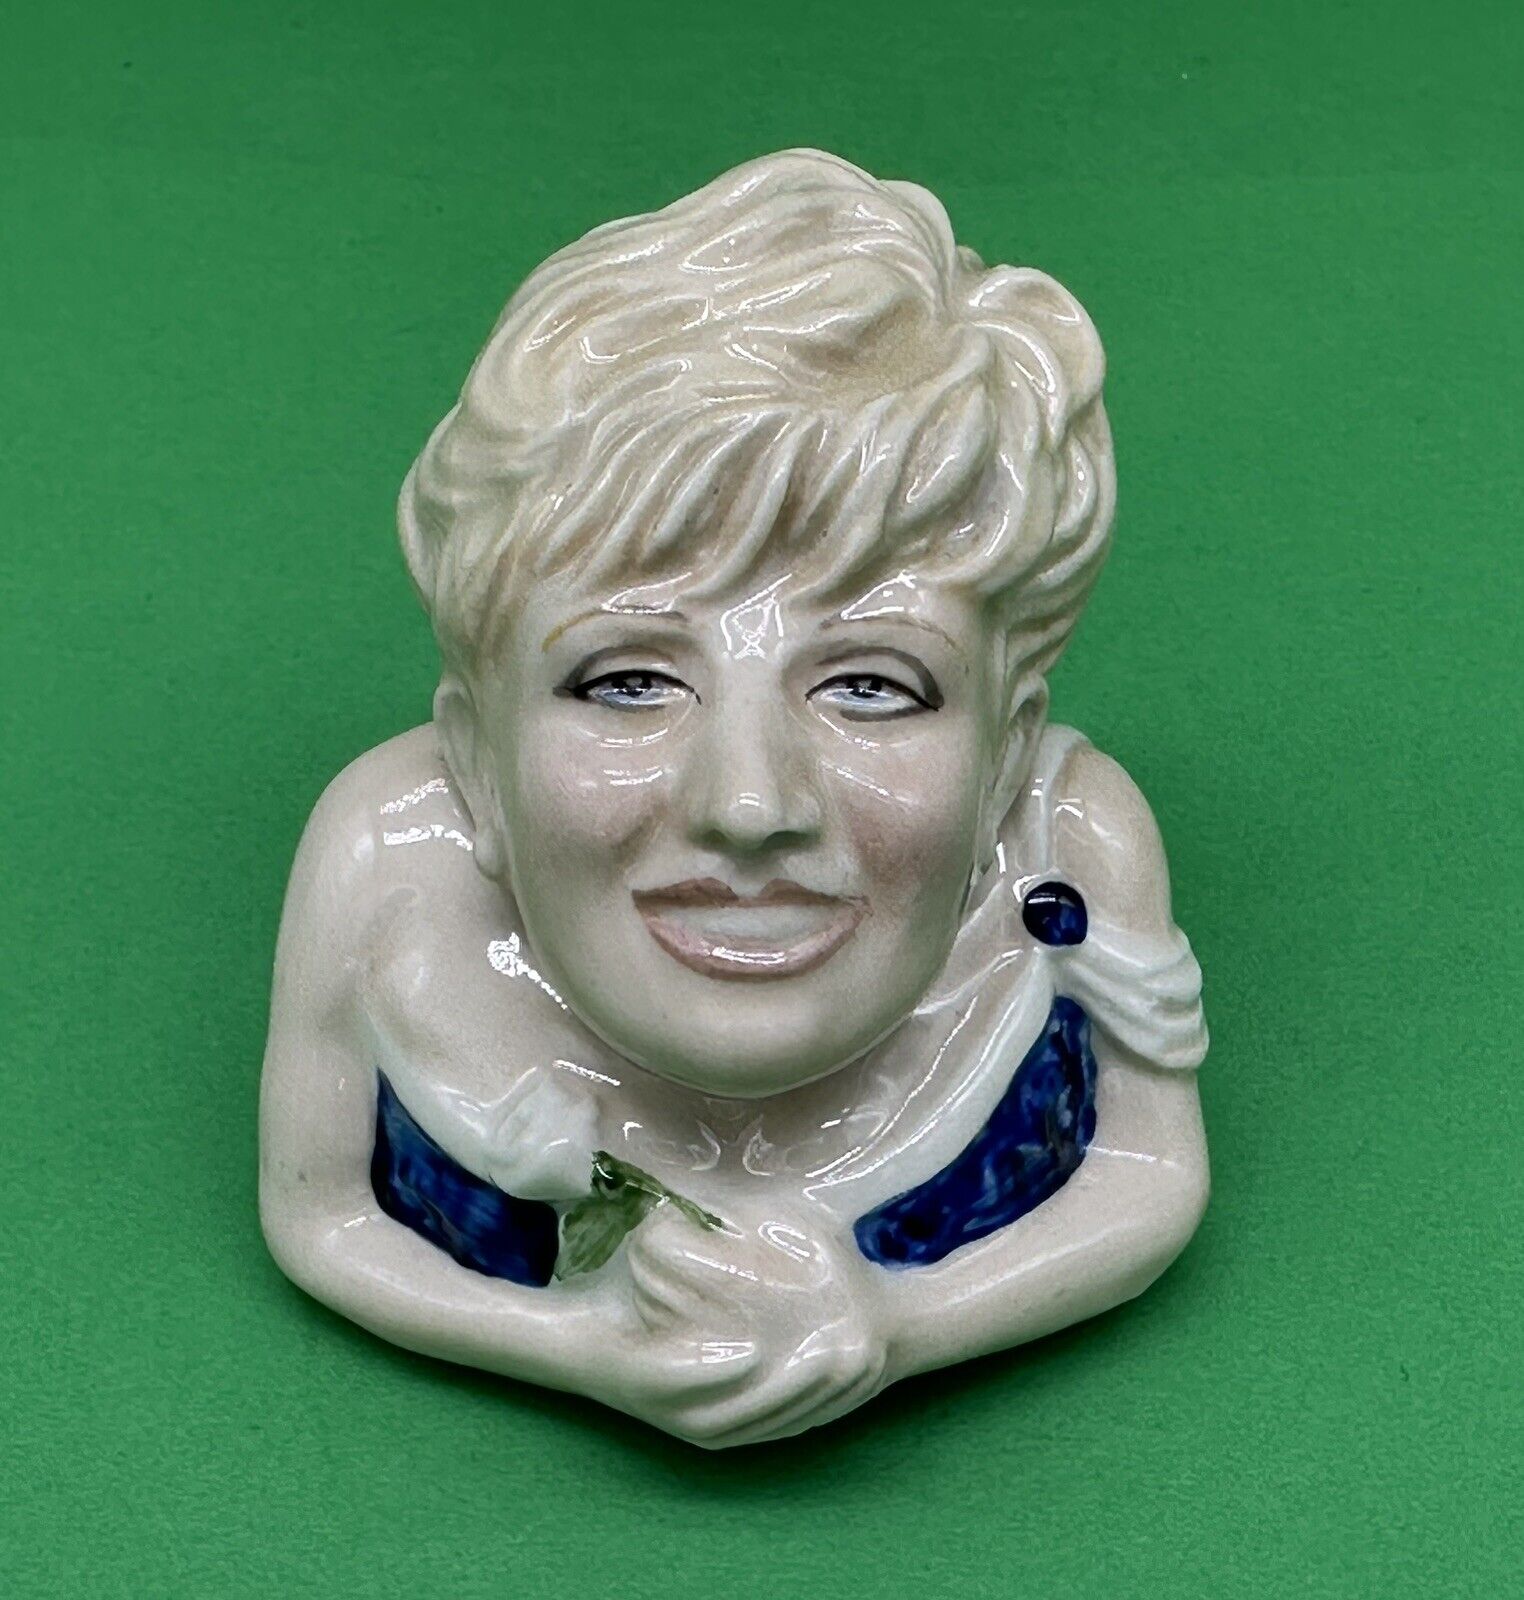 Kevin Francis Face Pots- Princess Diana Prototype/Color Trial, c.2004, 2.5